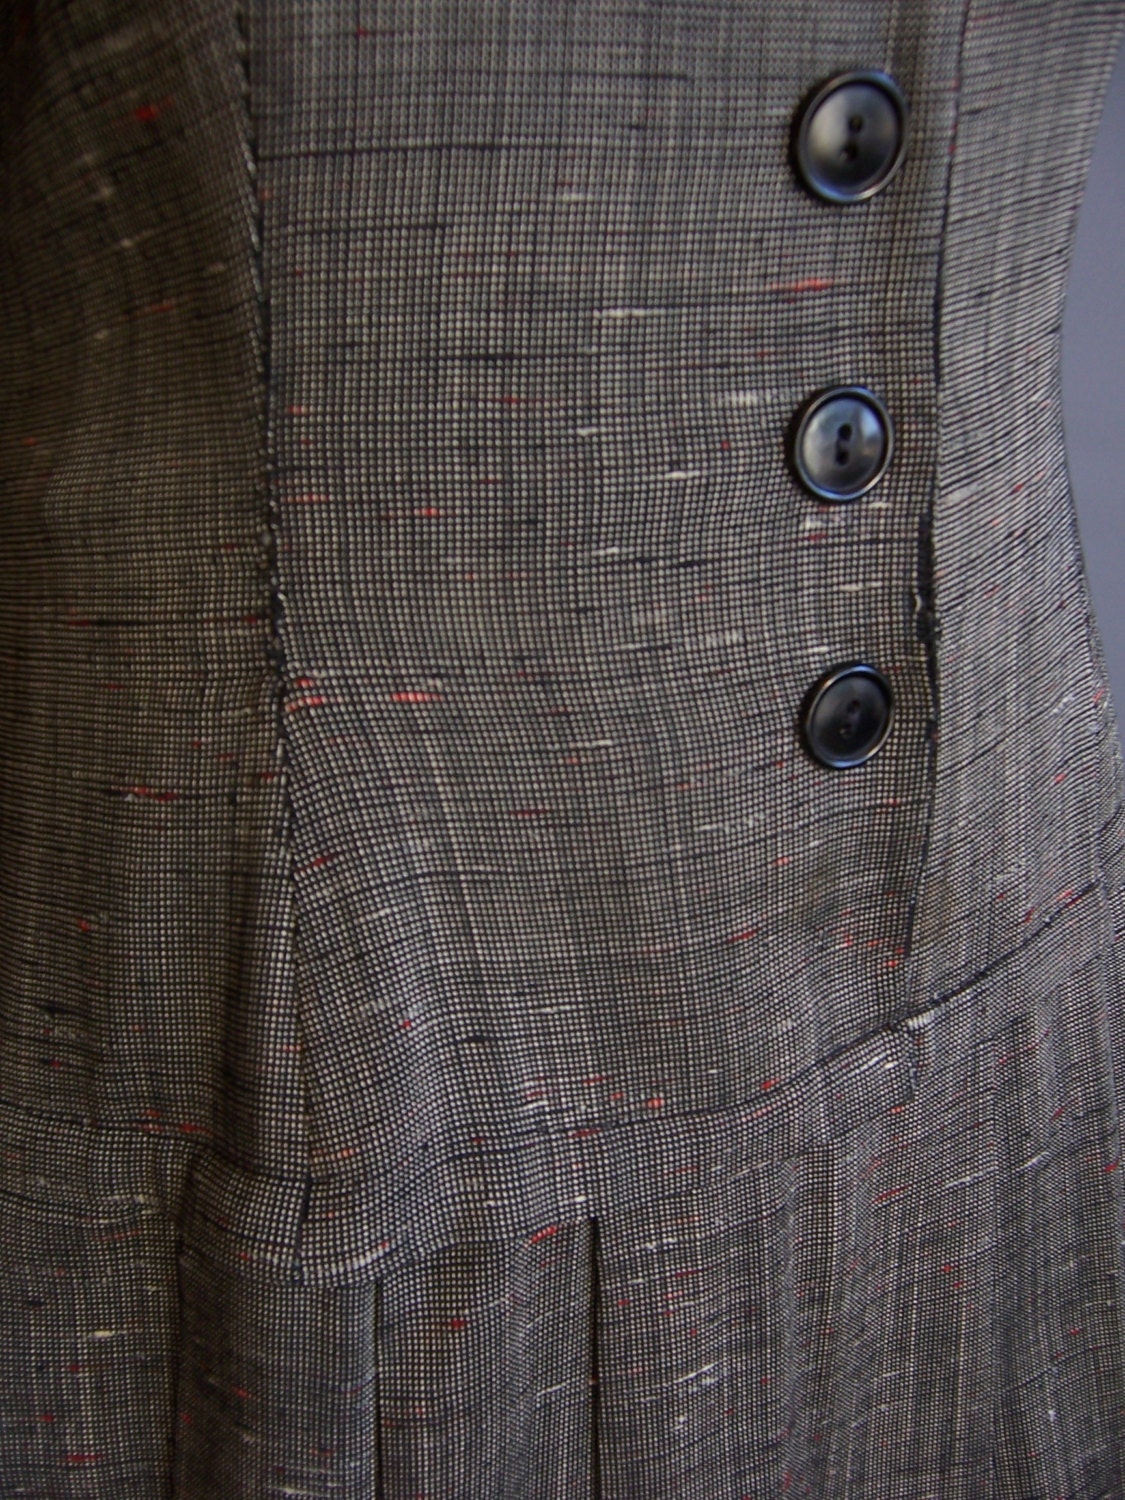 1950s Gay Gibson dropped-waist dress cotton/rayon blend tweedy